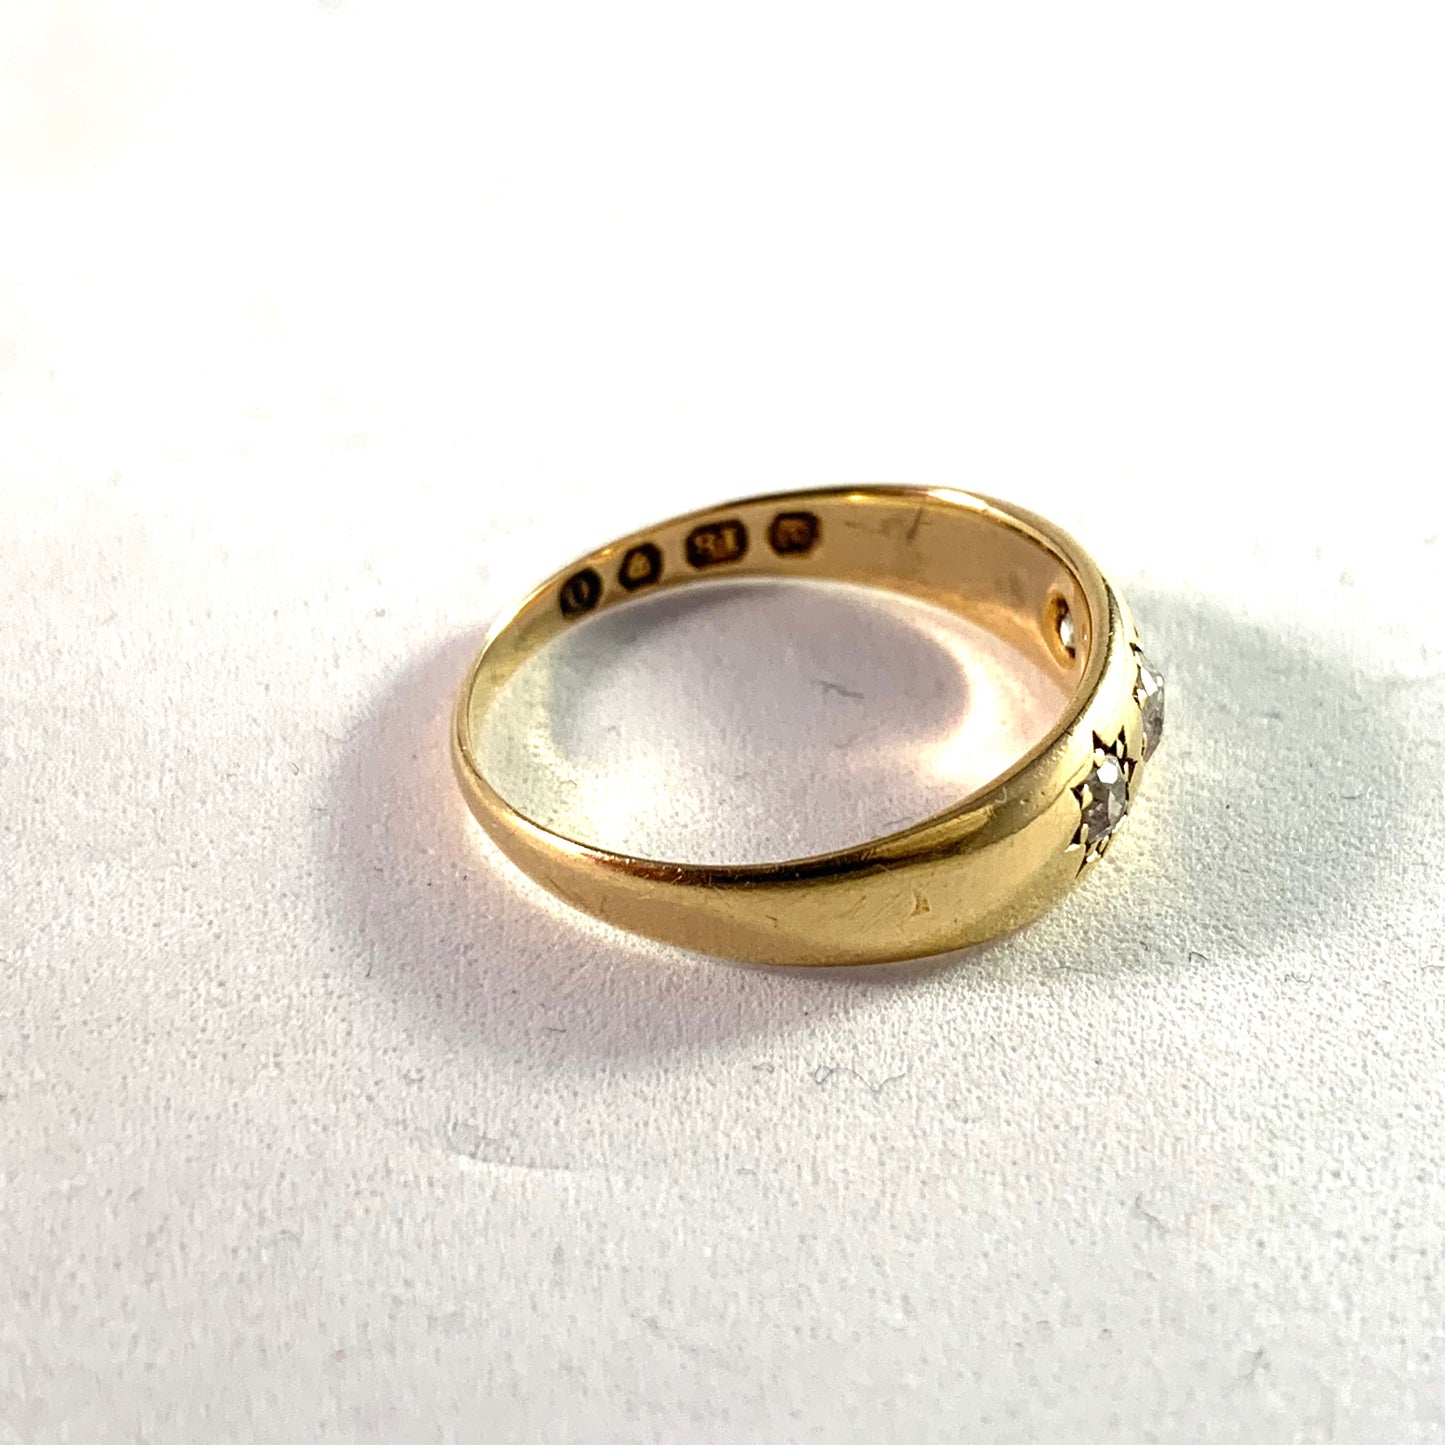 Brockwell & Son, London 1889 Victorian 18k Gold Diamond Gypsy Ring.